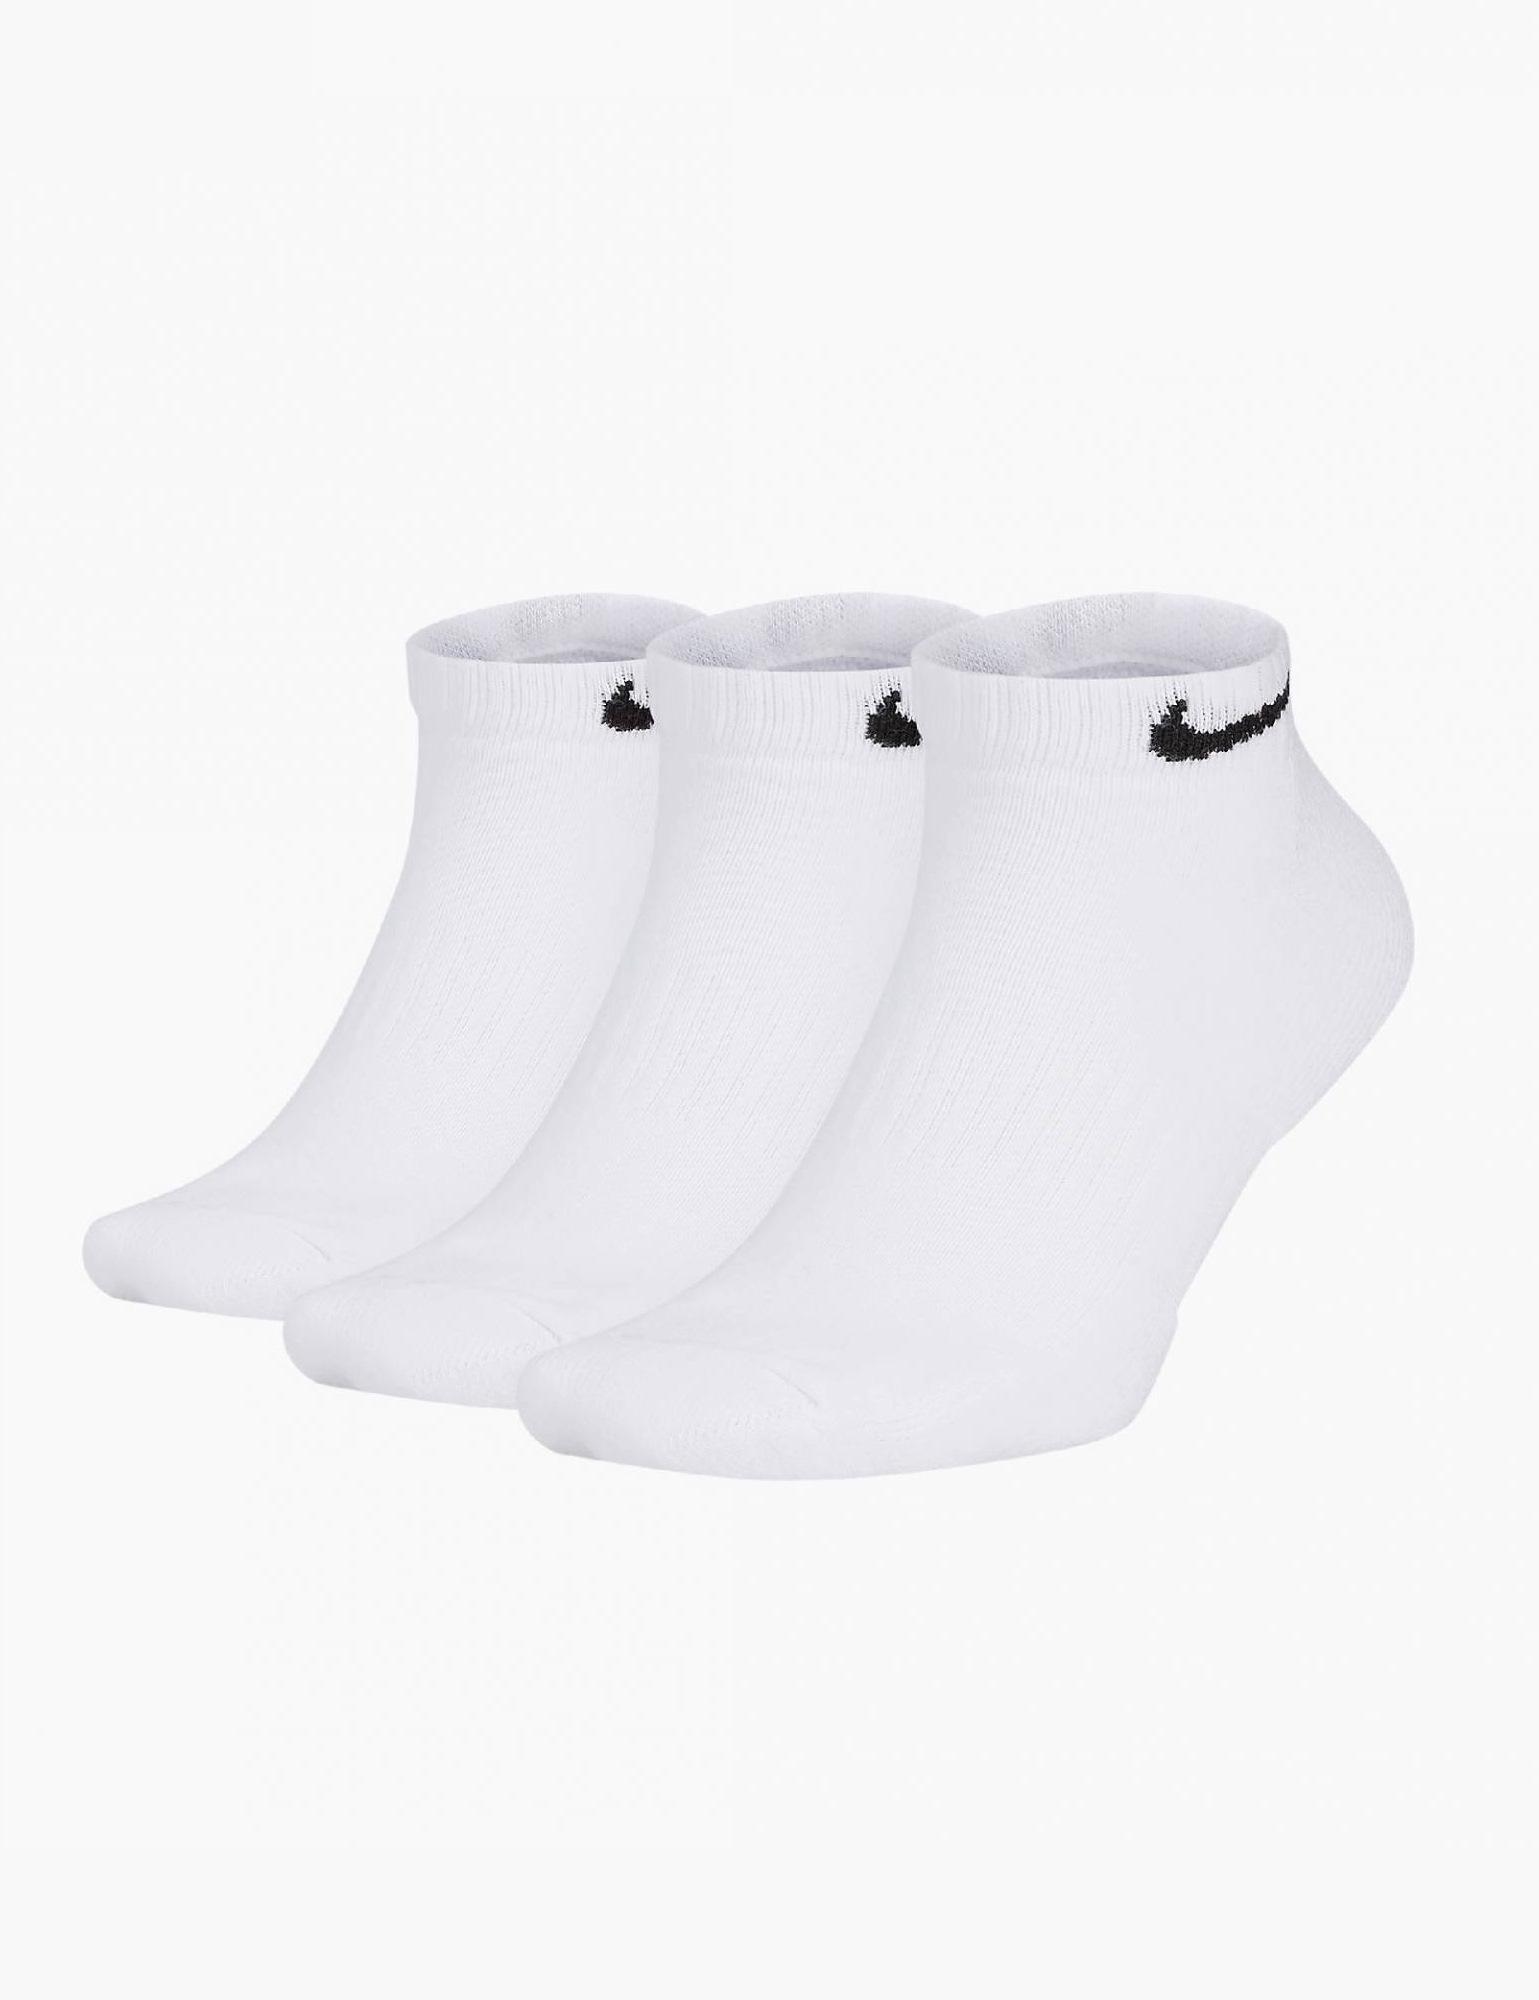  Nike Cushioned Low- Cut Socks : 3pk - White/Black